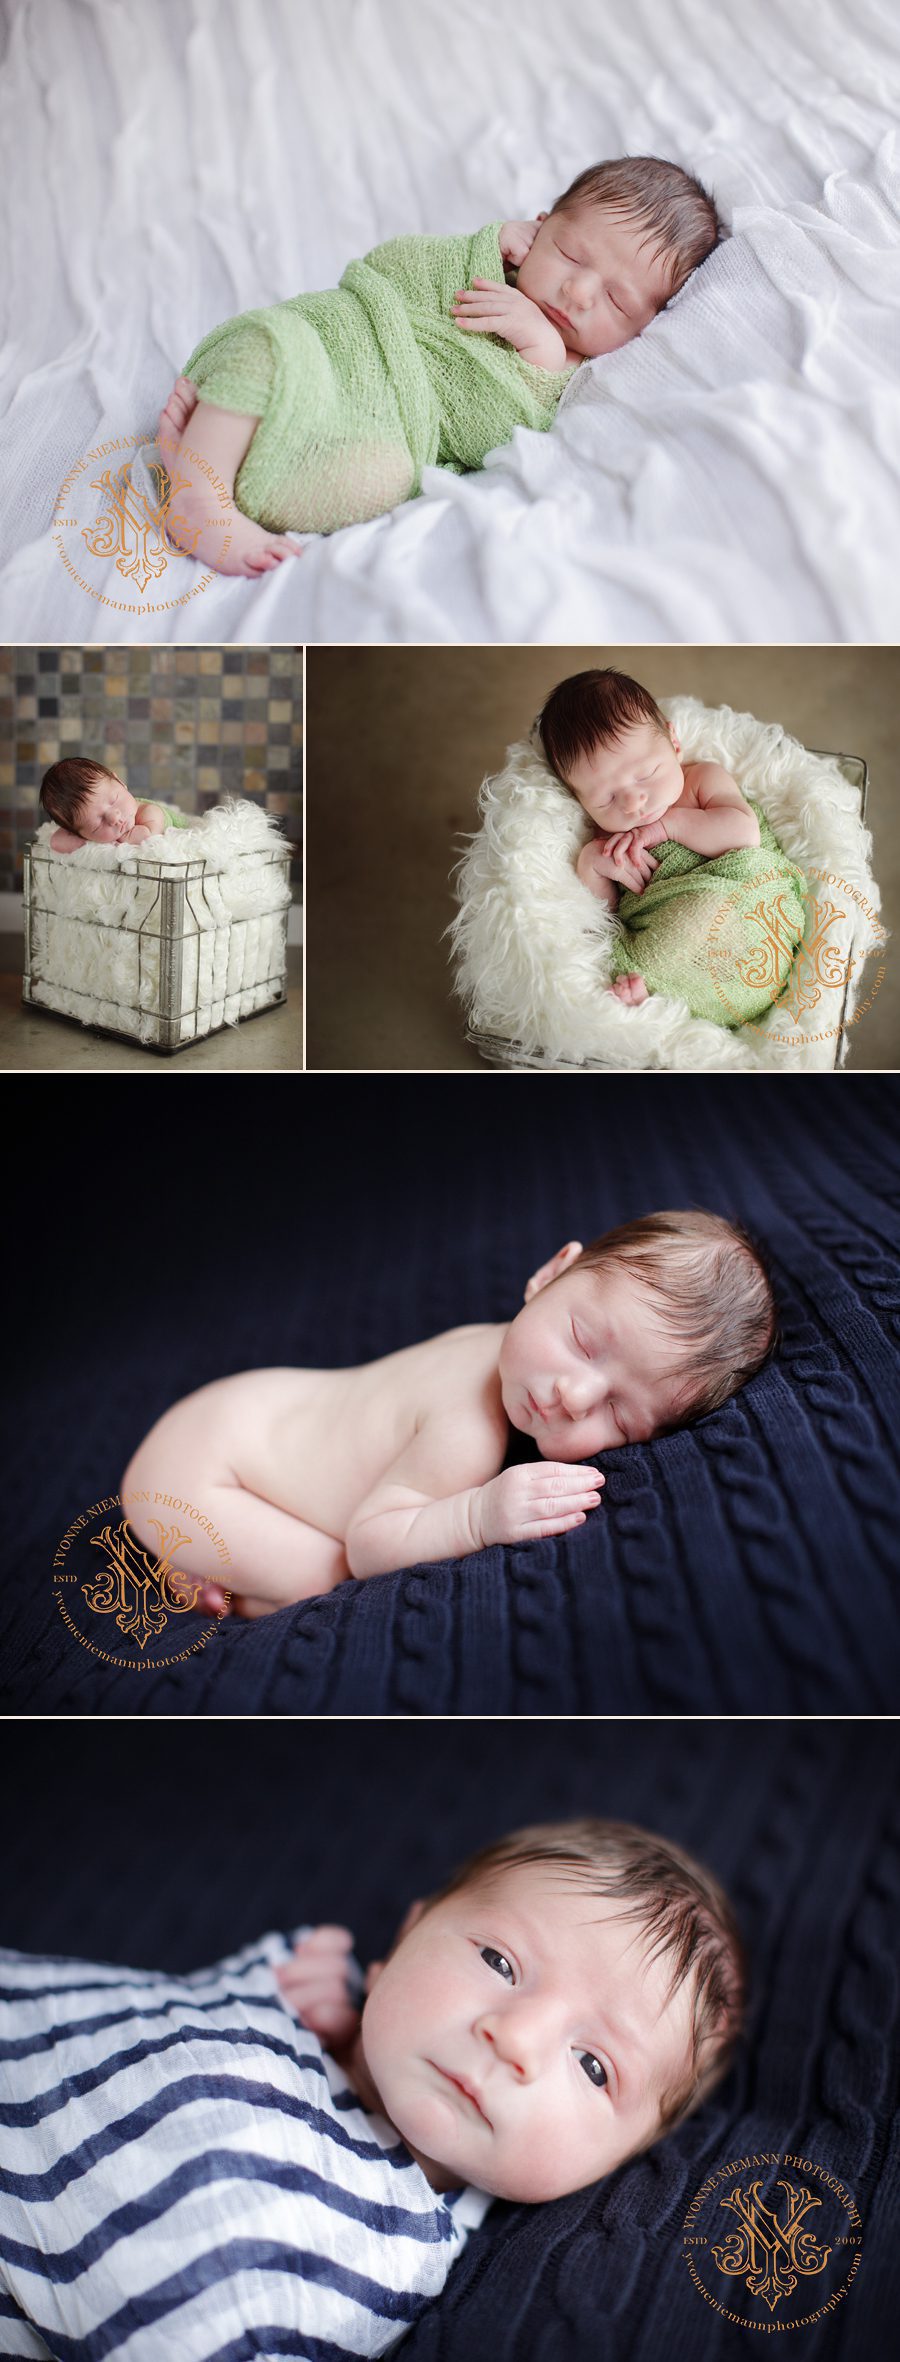 Portraits of a newborn under one week old taken by Yvonne Niemann Photography in St. Louis